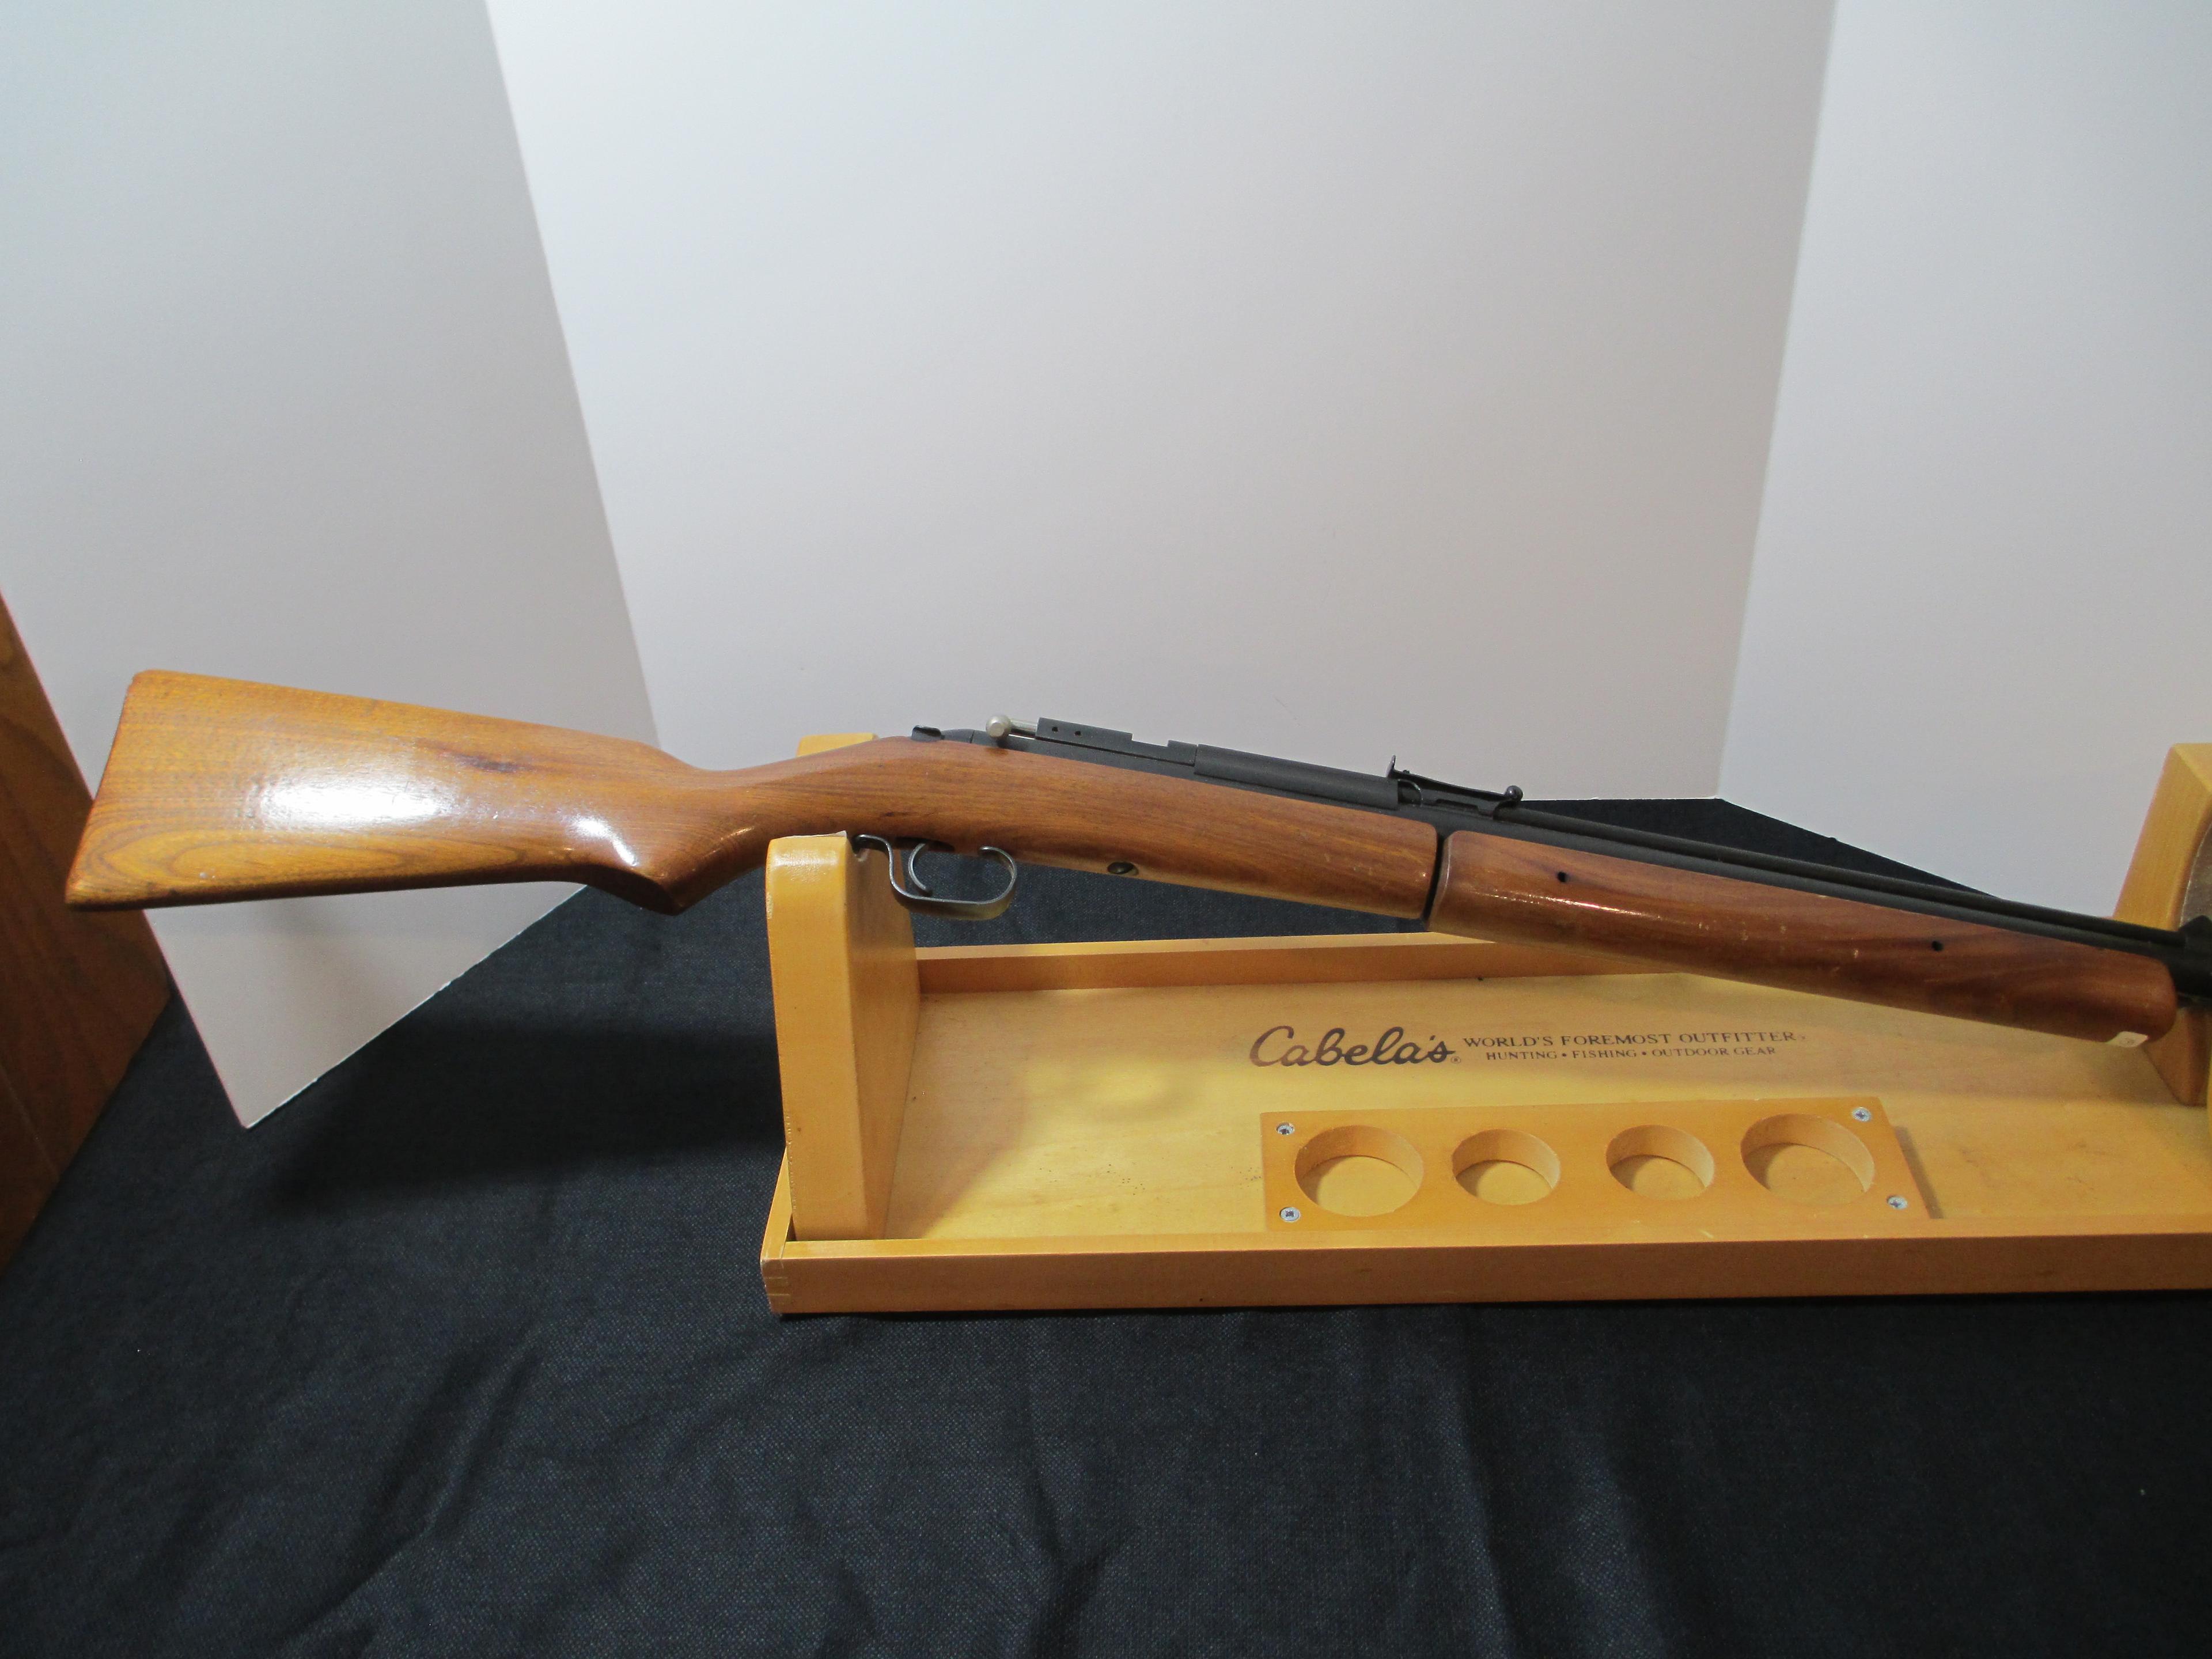 Sheridan Vintage Air Rifle 1986 "C Series" 5mm (.20 Cal.)